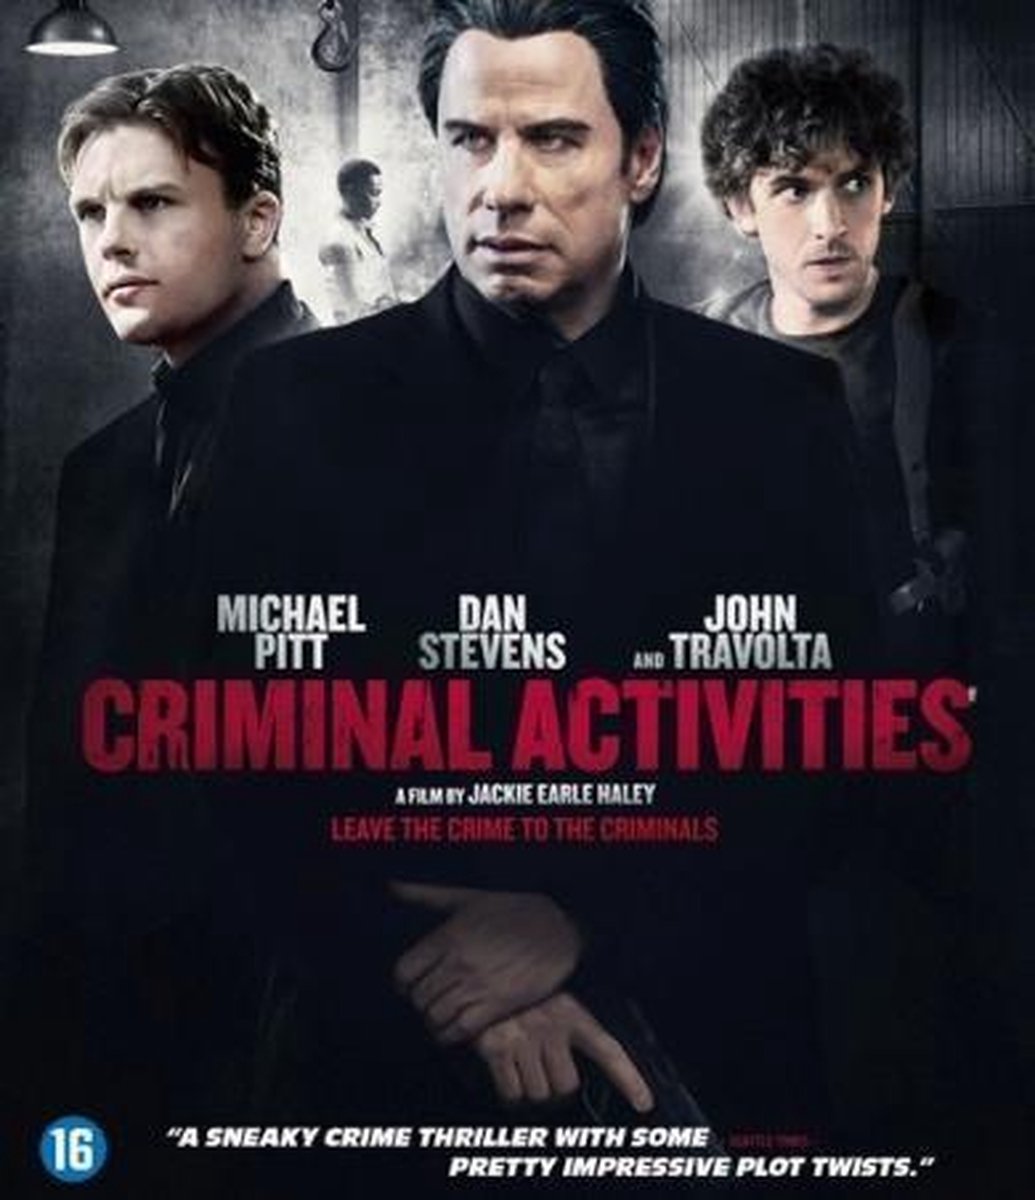 CRIMINAL ACTIVITIES